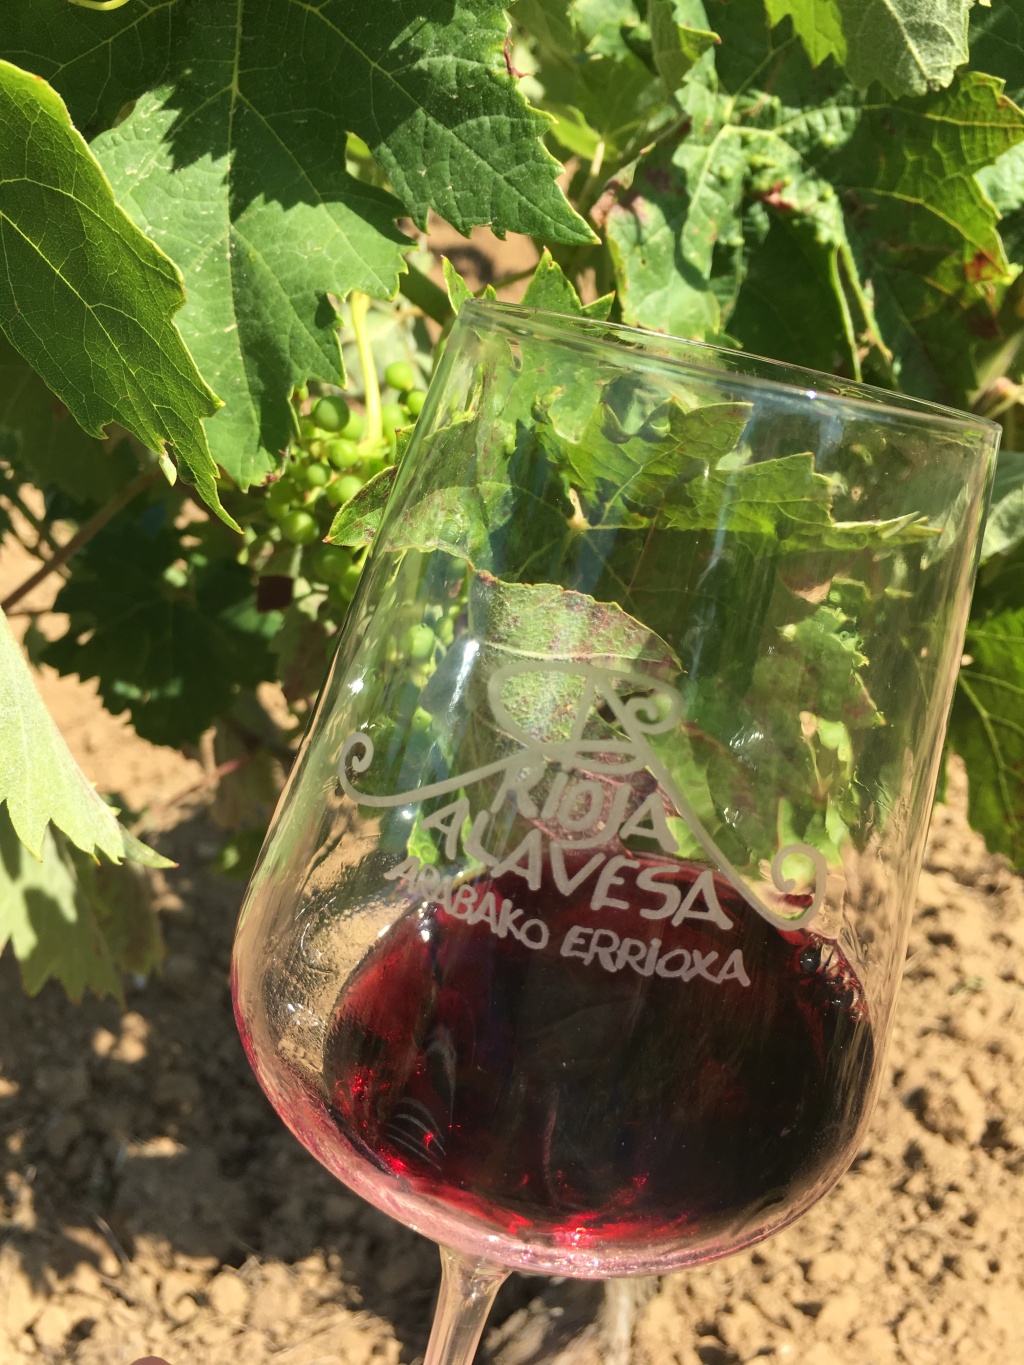 Rioja Alavesa: The Perfect Day